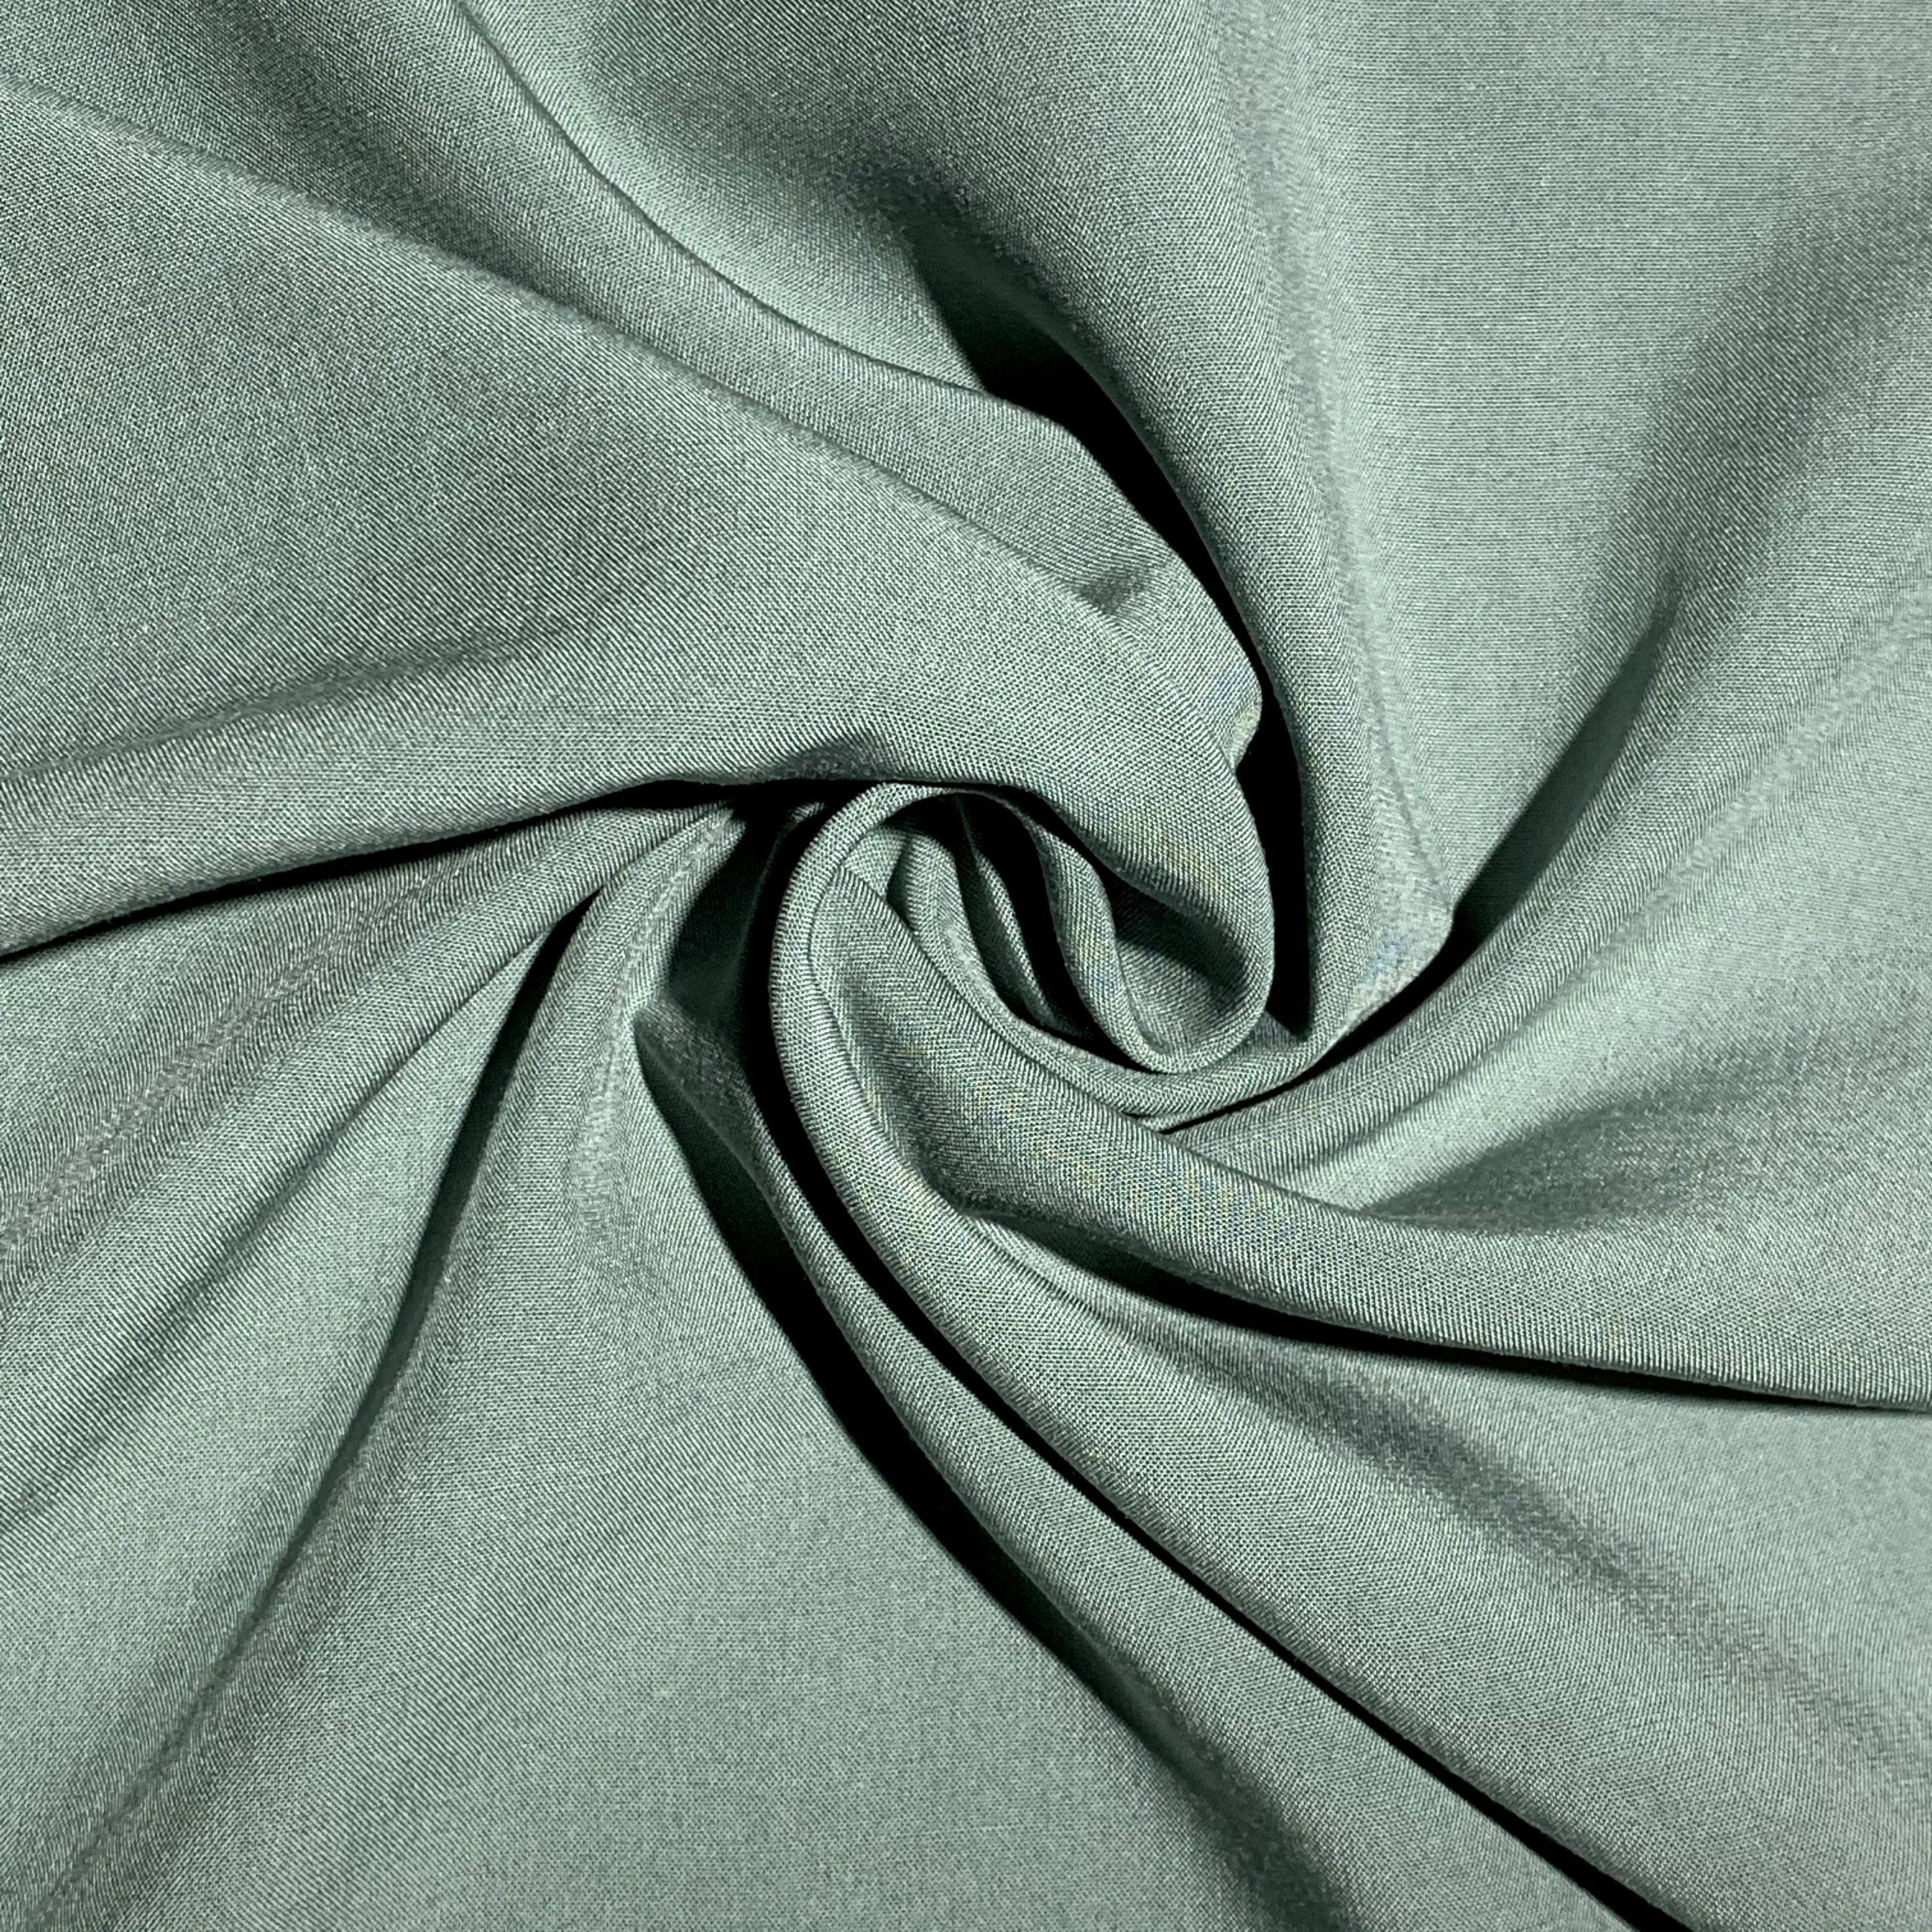 Fabric Rayon Fabric 2020 Hot High Quality 45*45 Rayon 100% Fabric